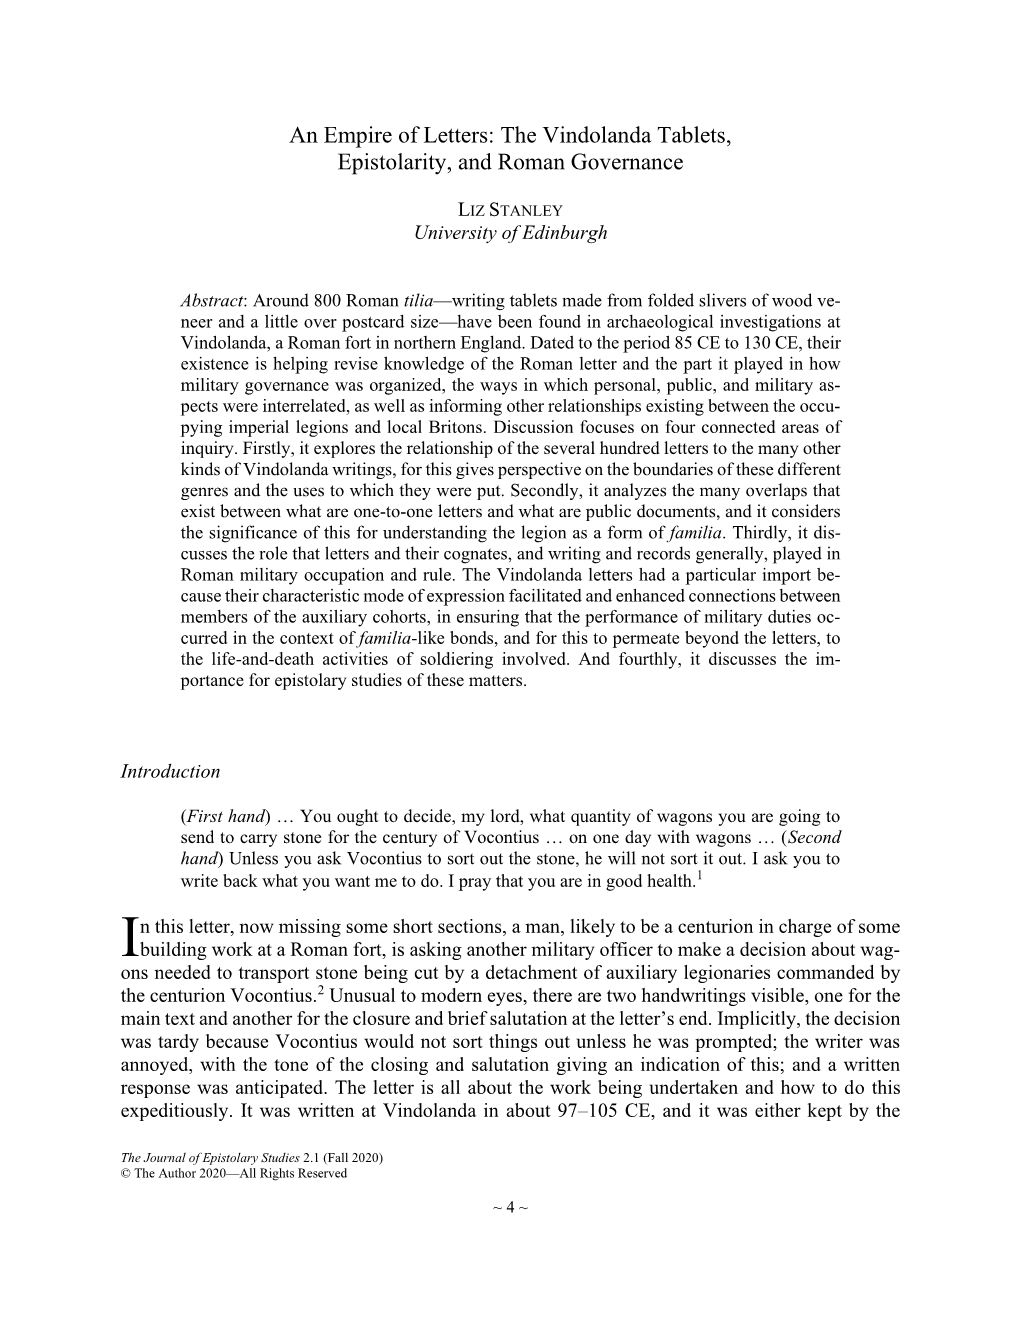 The Vindolanda Tablets, Epistolarity, and Roman Governance